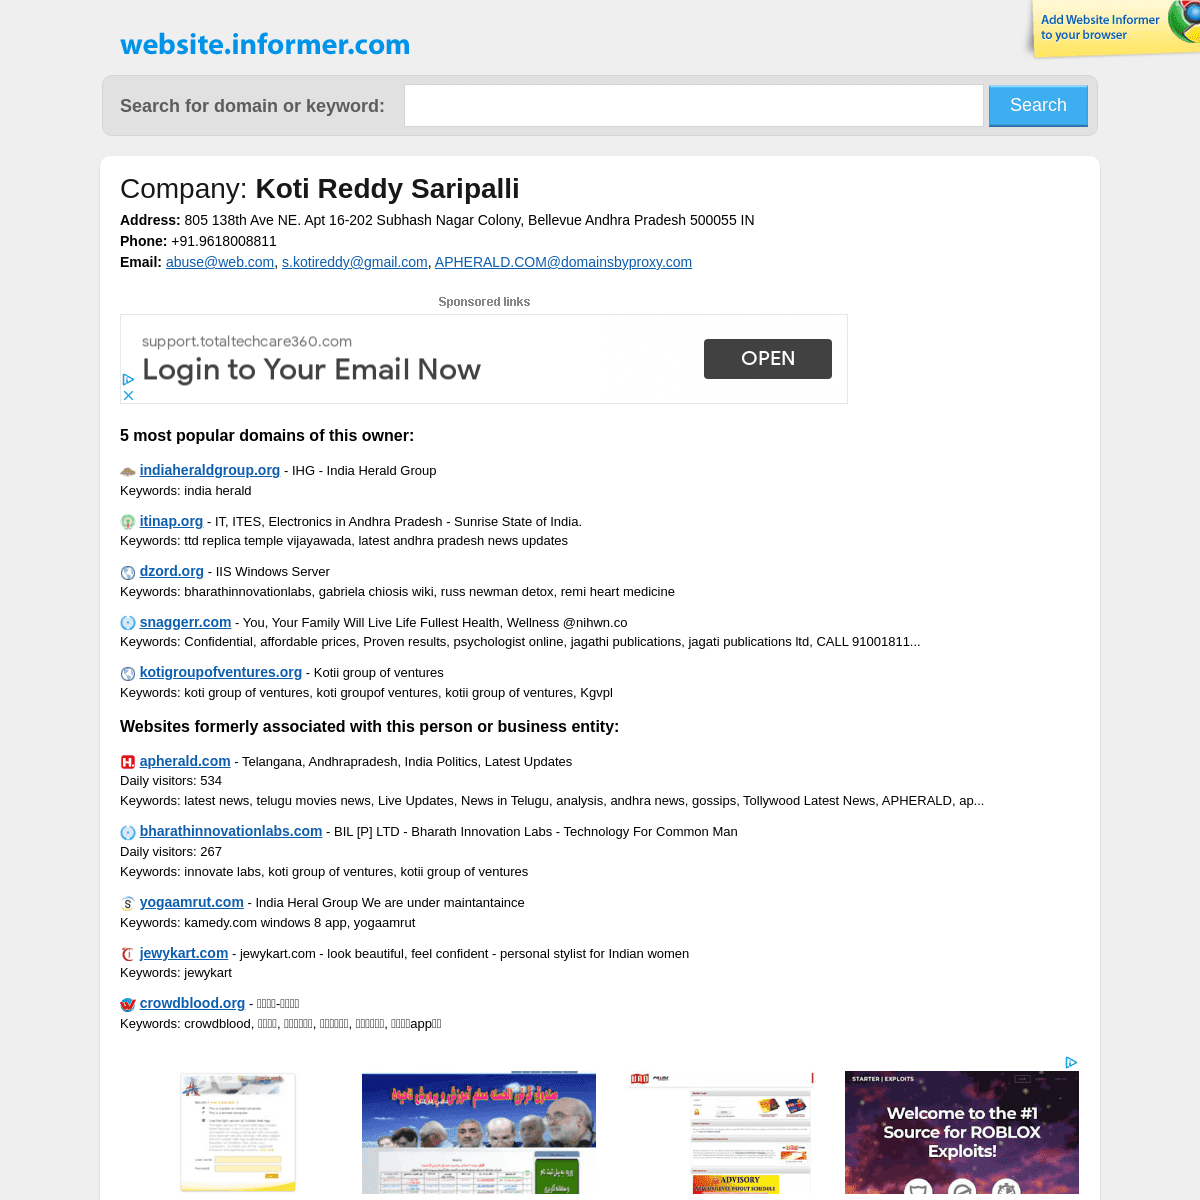 A complete backup of https://website.informer.com/Koti+Reddy+Saripalli.html